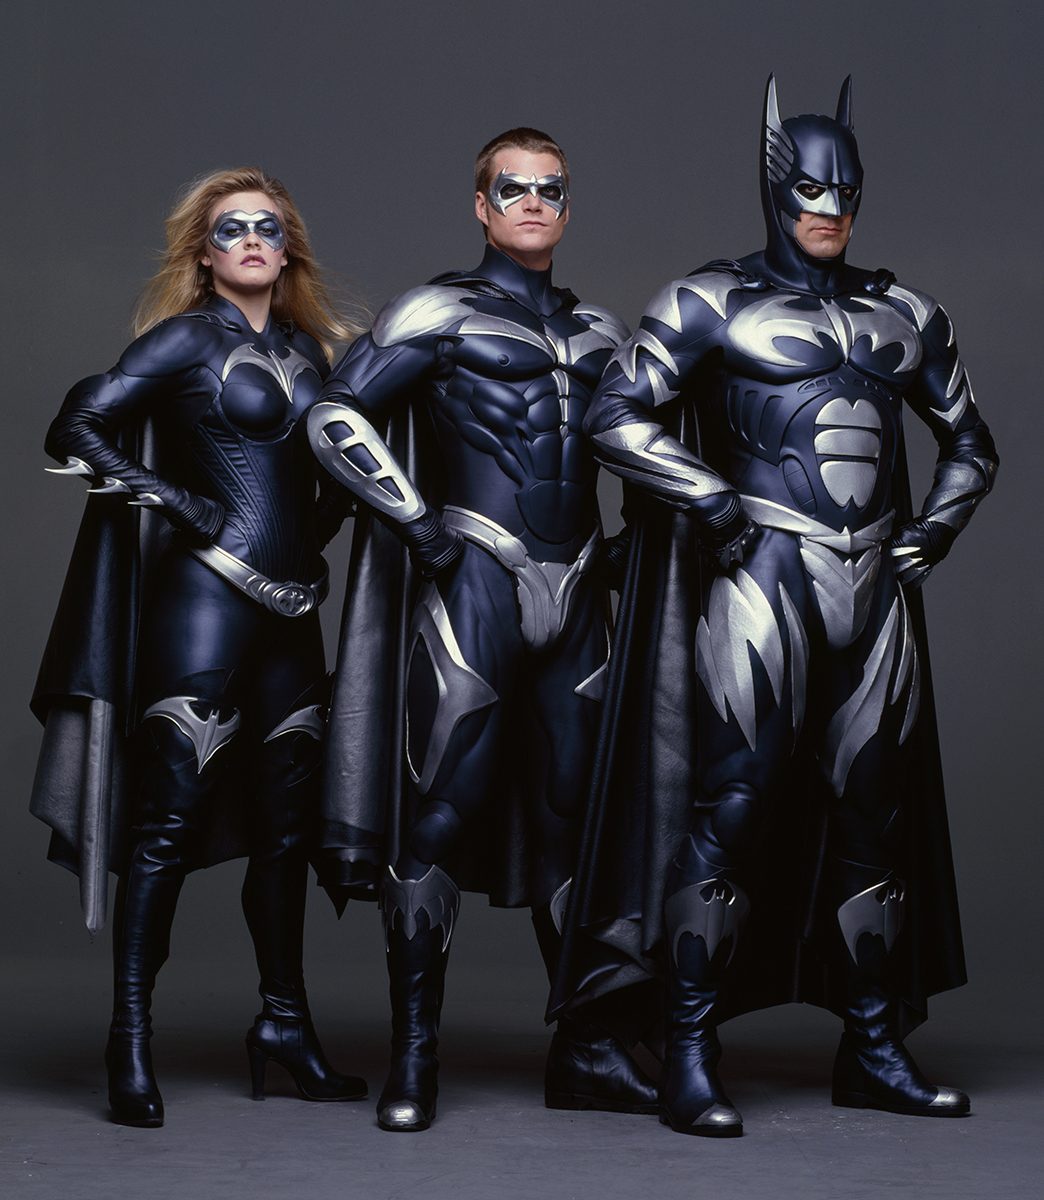 Sonar Batman suit | kesseljunkie